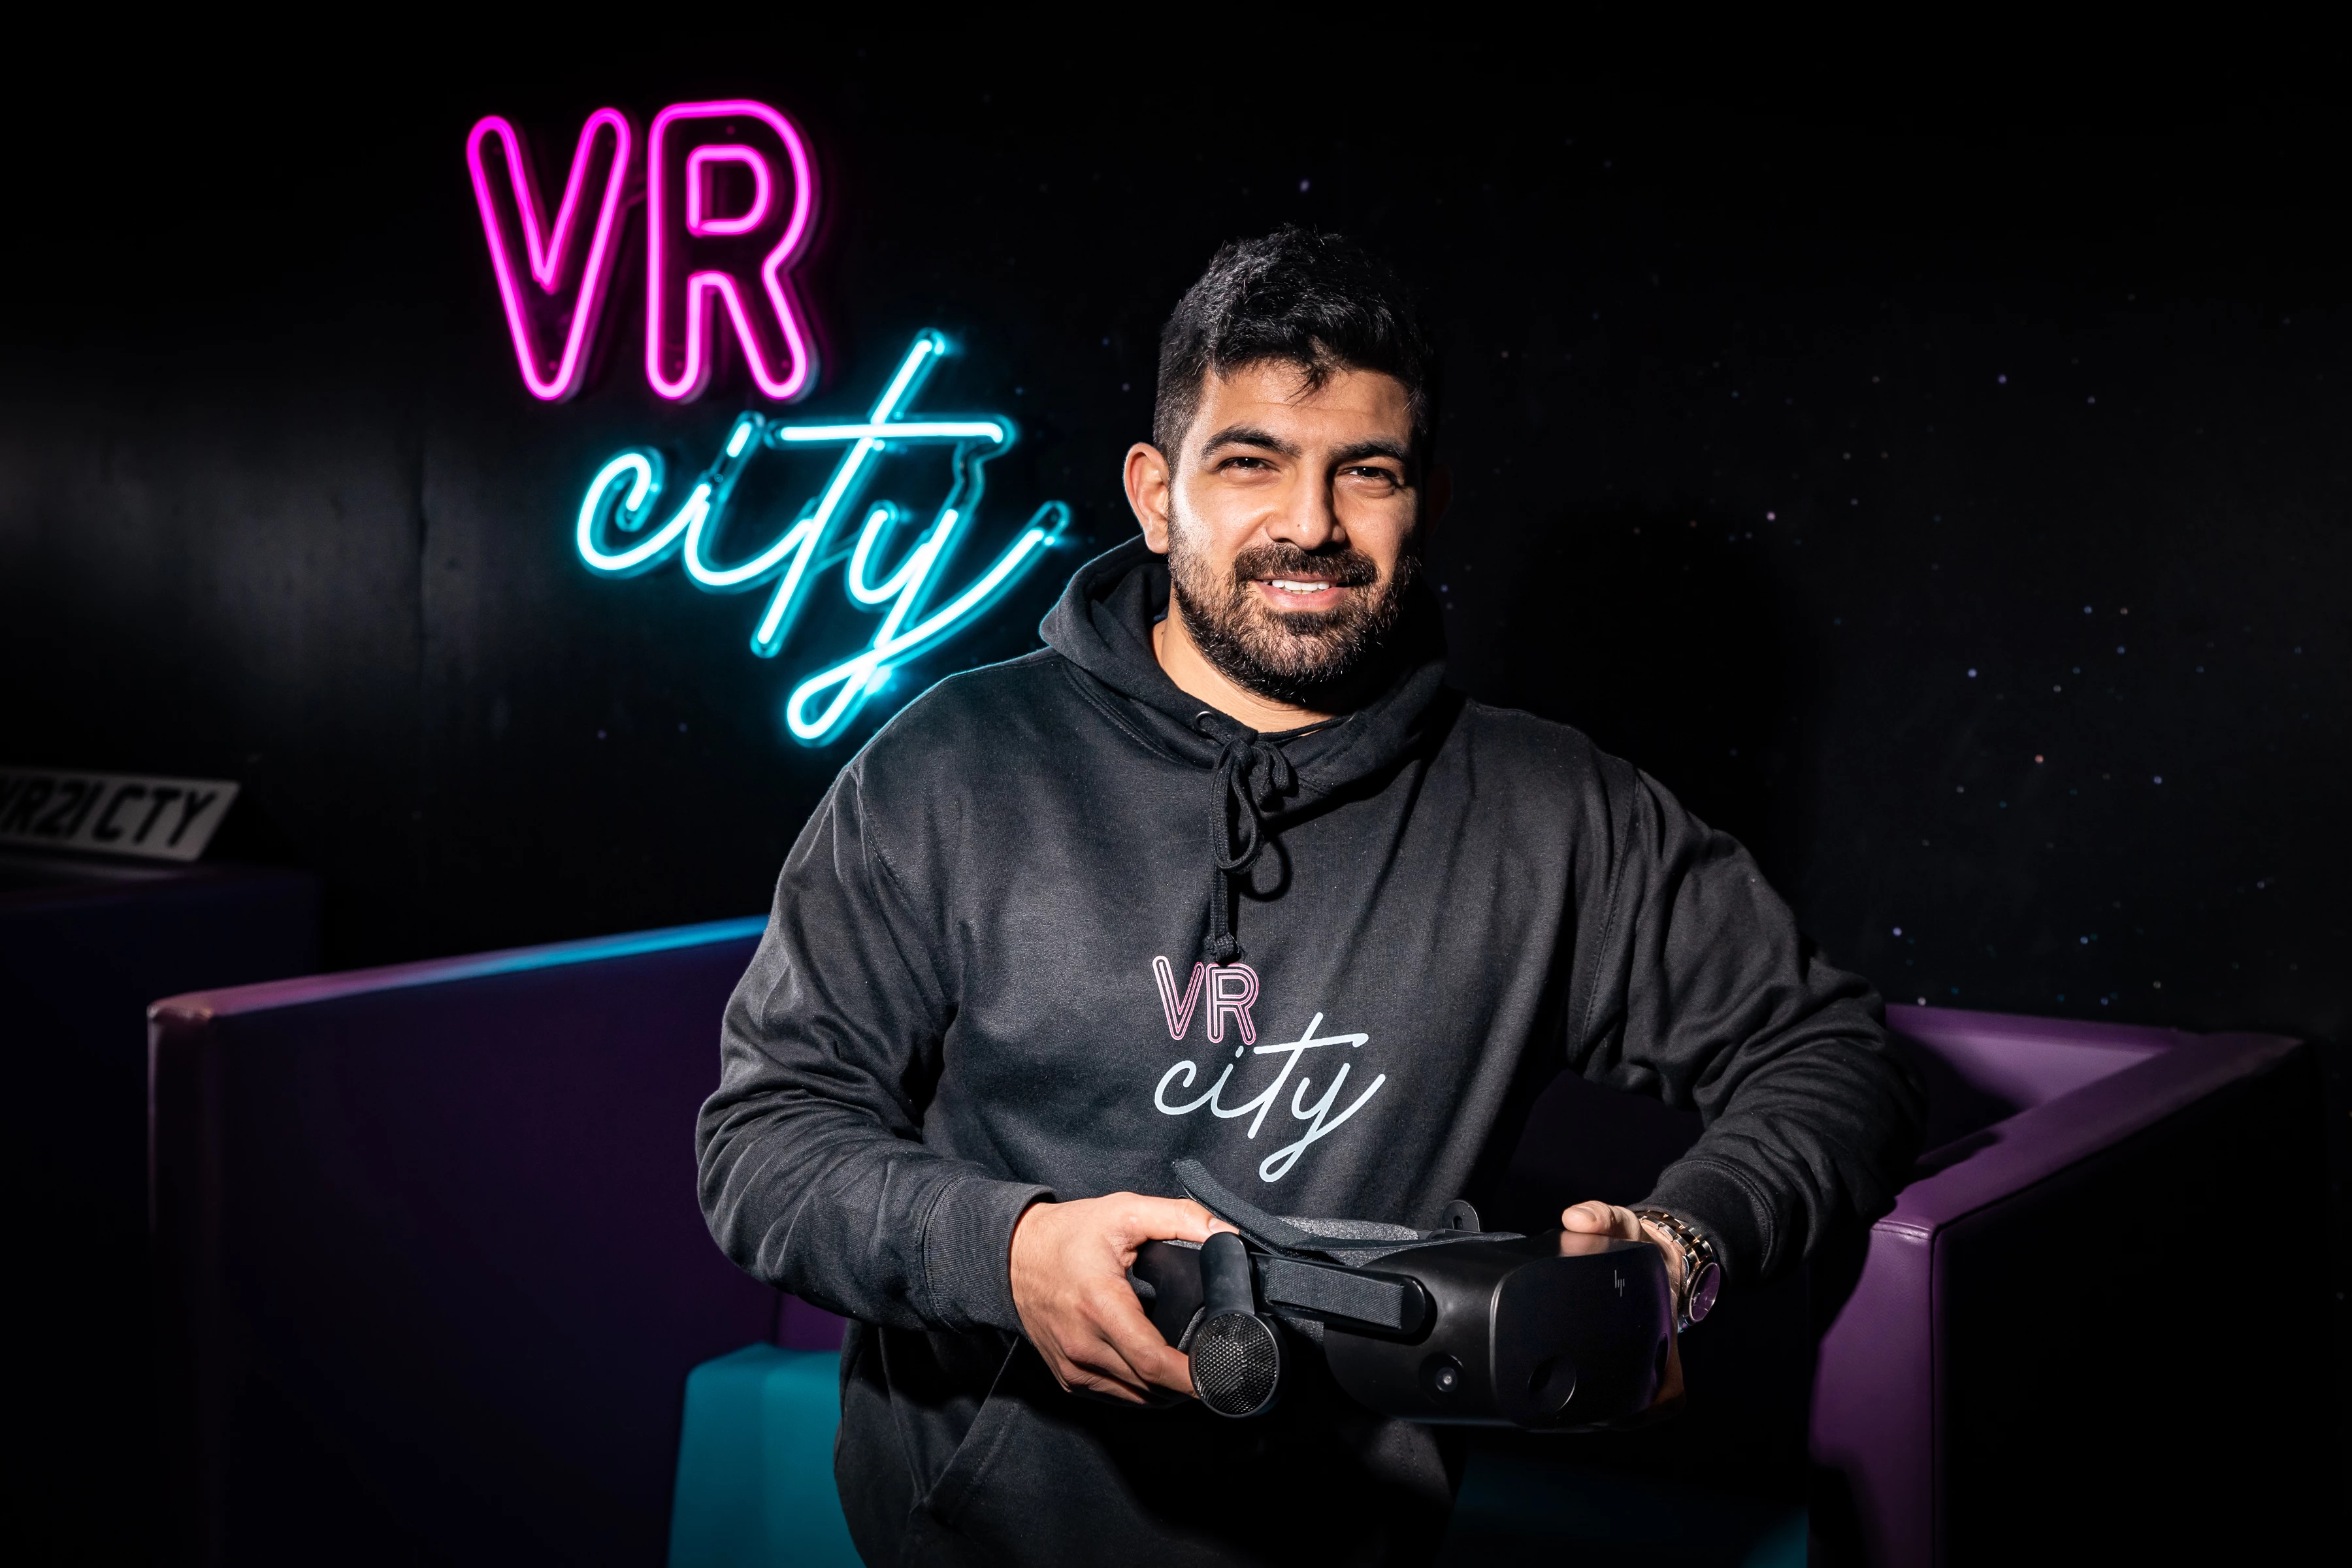 Owner of VR City, Hasan Khan